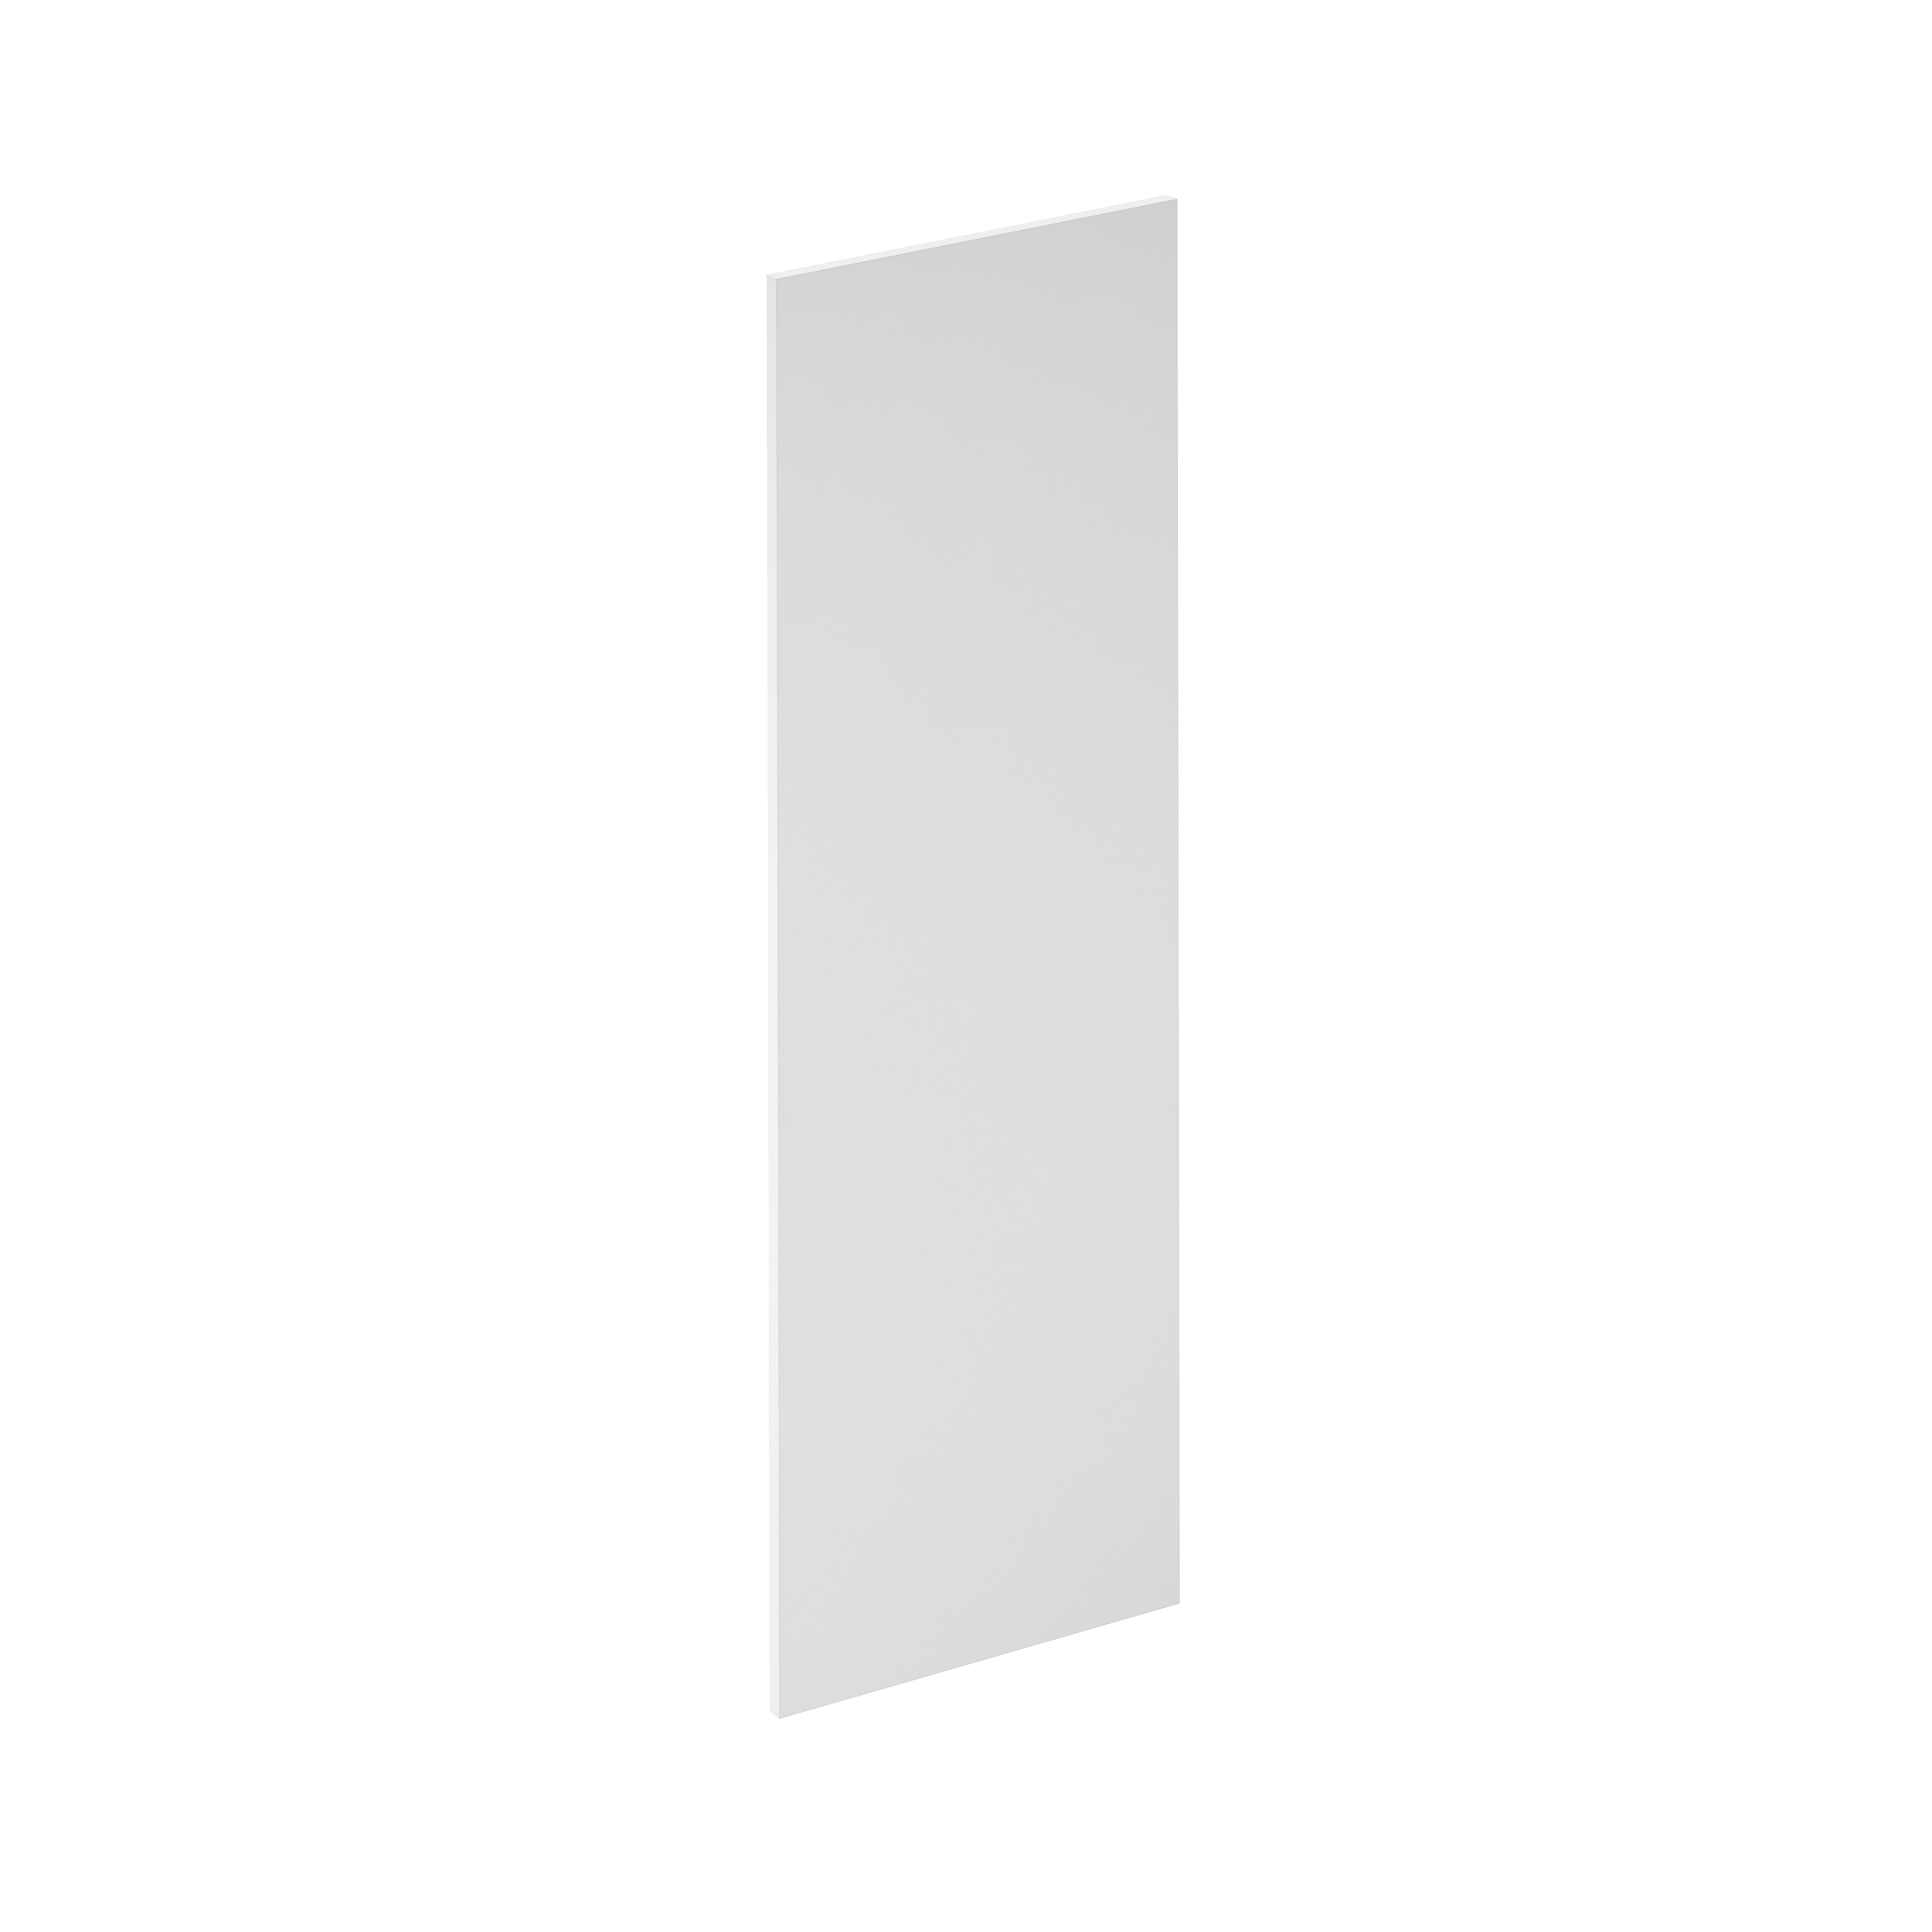 Puerta para mueble de cocina sofia blanco mate h 137.6 x l 45 cm